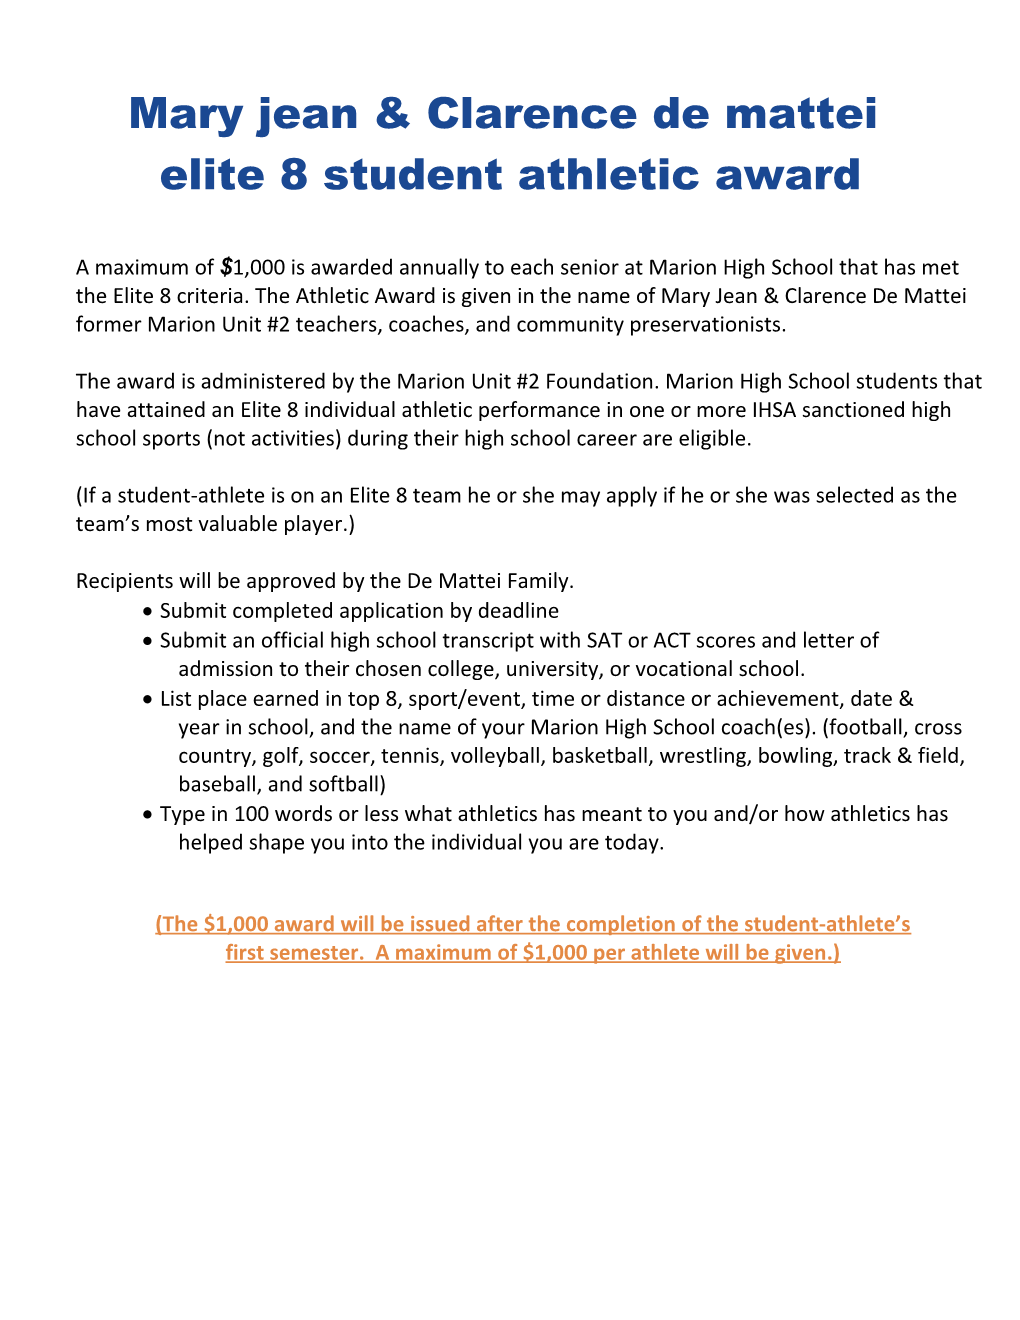 Elite 8 Student Athletic Award